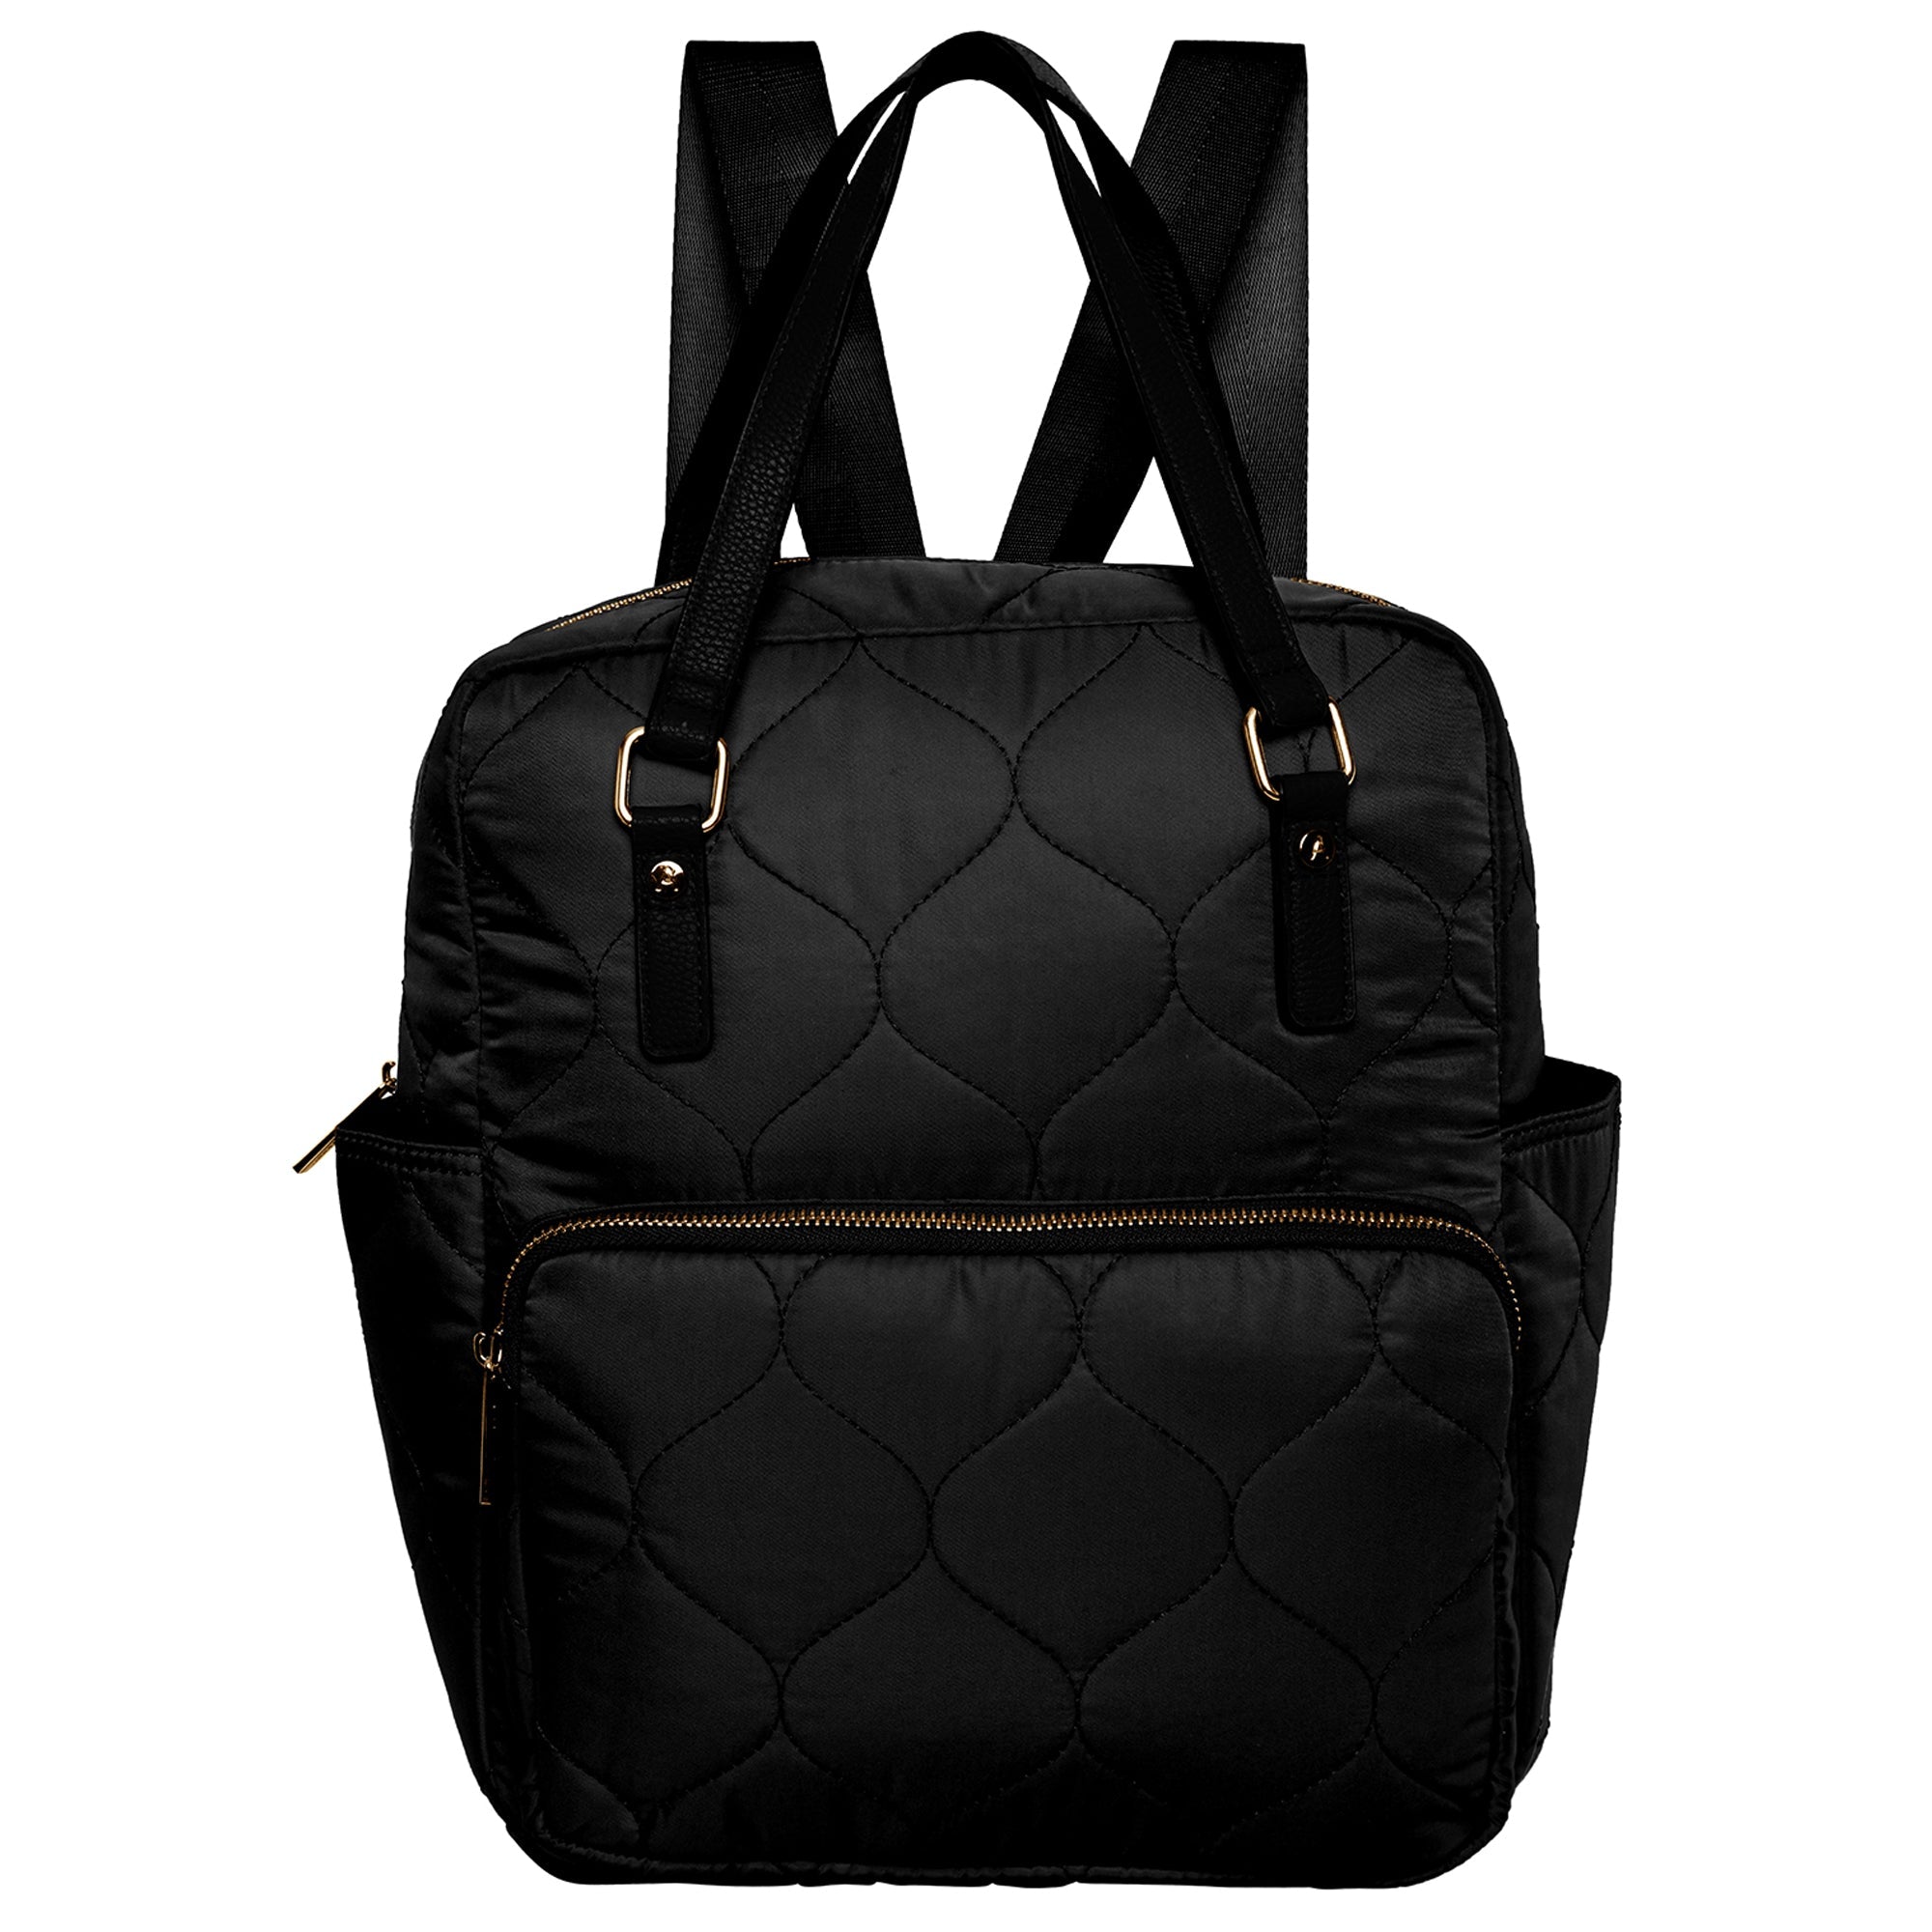 Accessorize London Women's Faux Leather Black Emmie Backpack